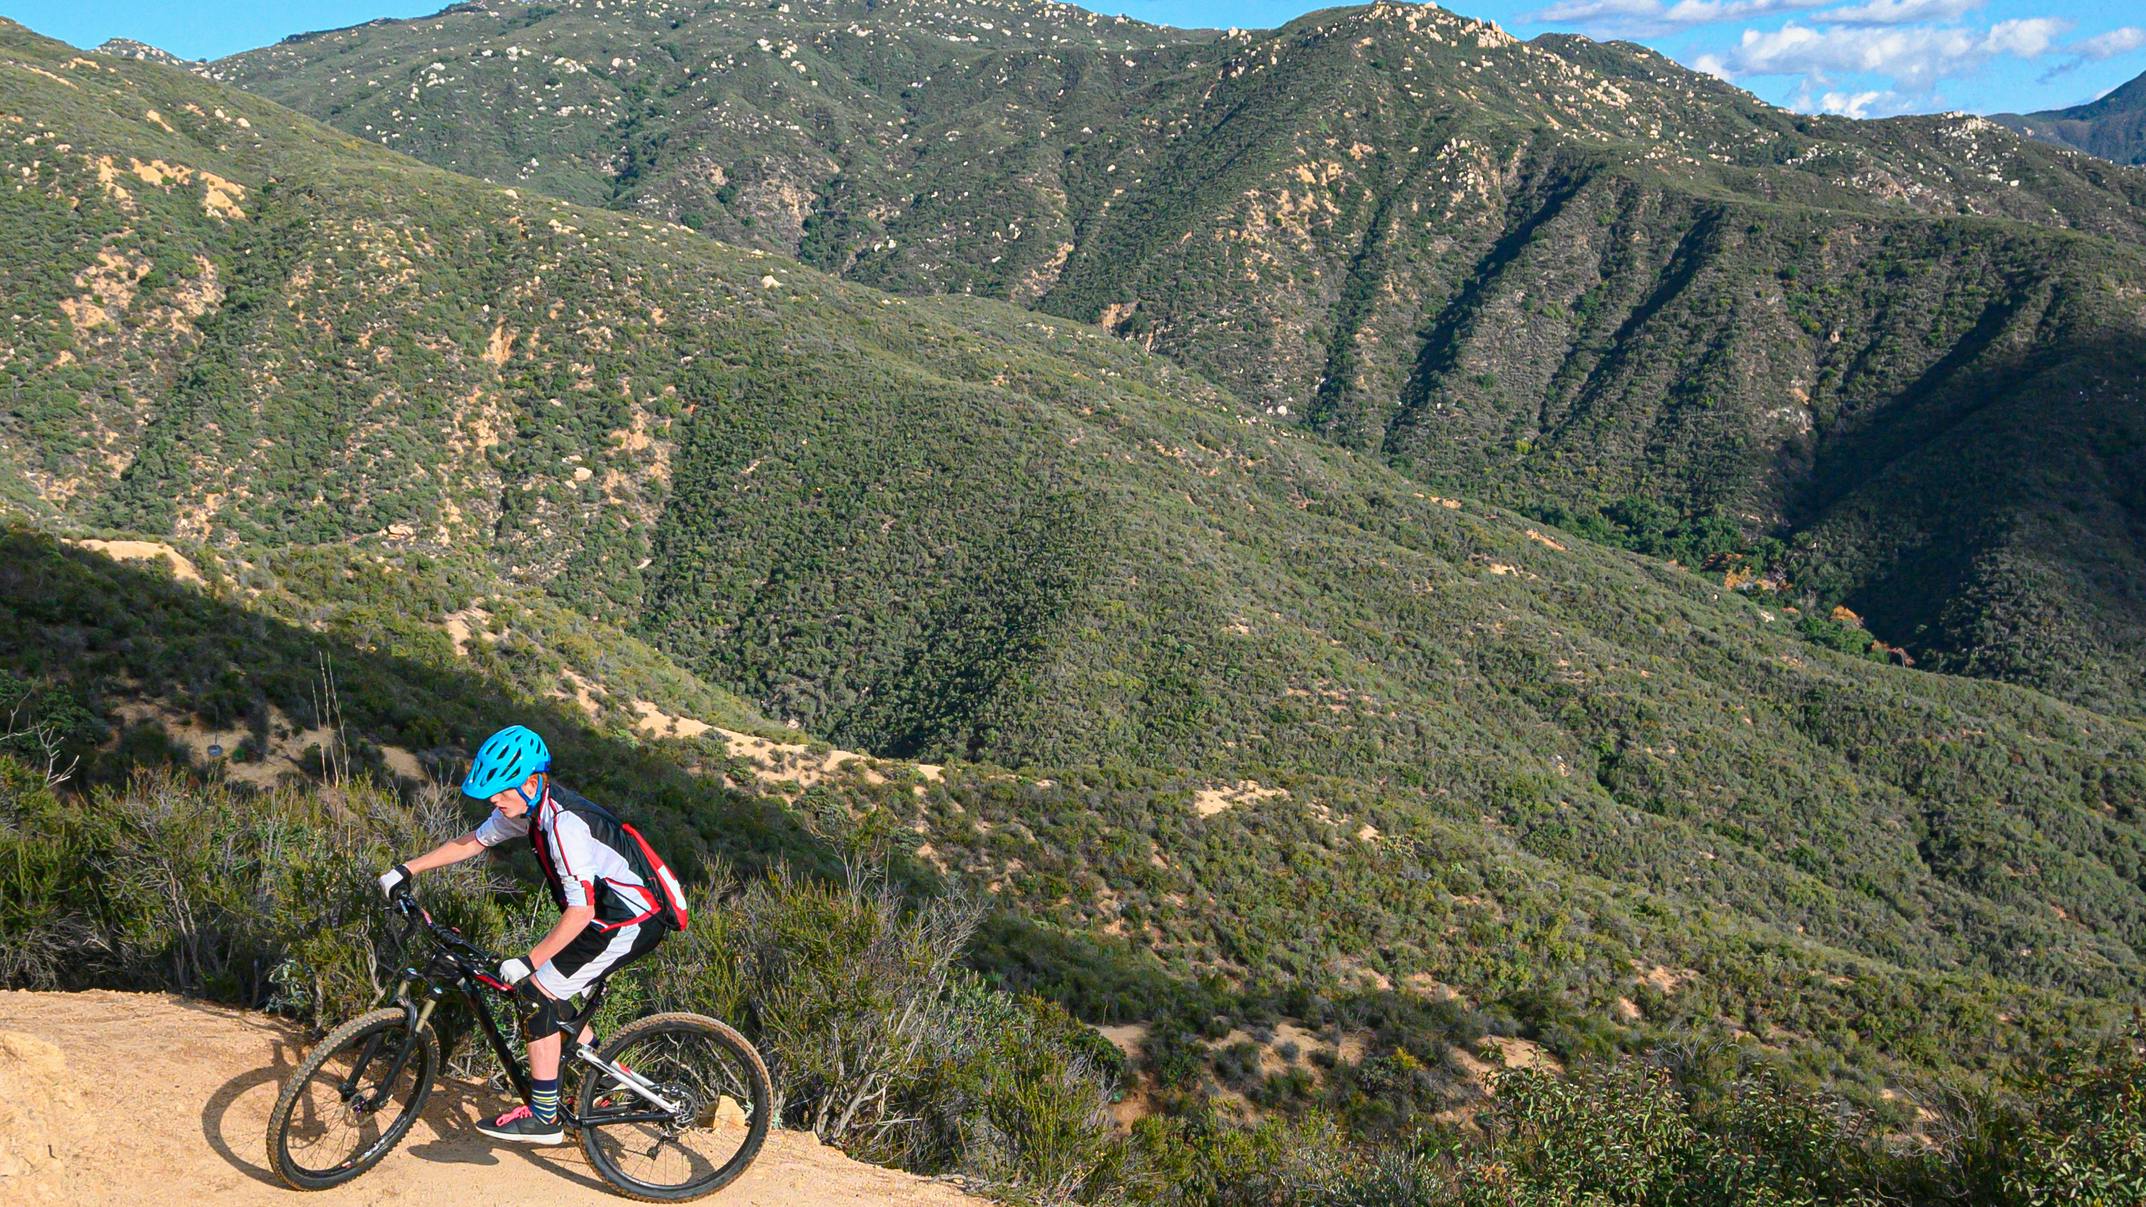 A mountain biker navigates a dusty, rocky trail in California.